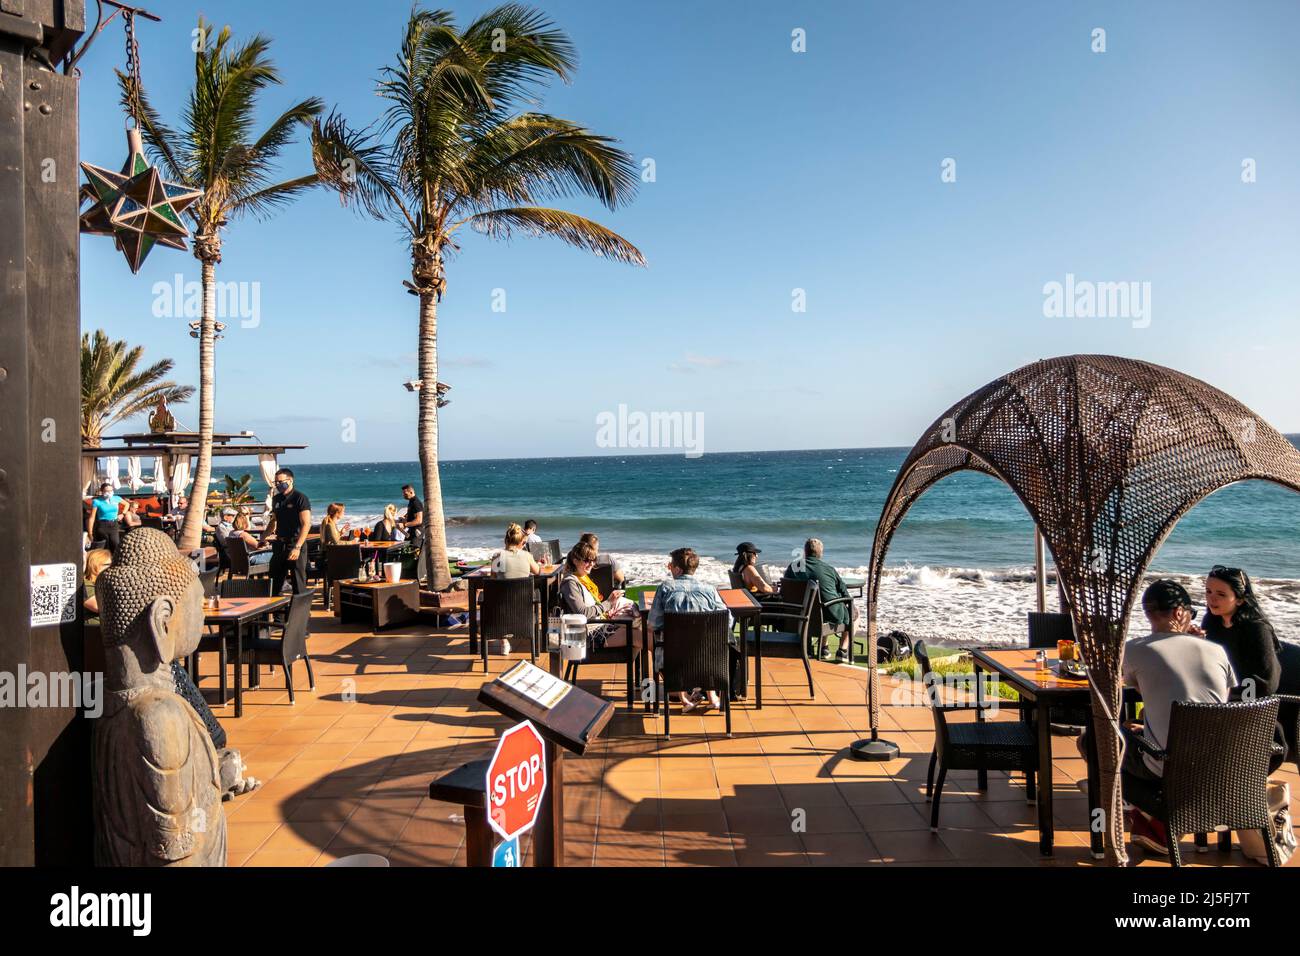 Restaurant La Ola, Terasse mit Meeresblick, Lanzarote, Kanarische Inseln, Kanaren, Spanien Stock Photo